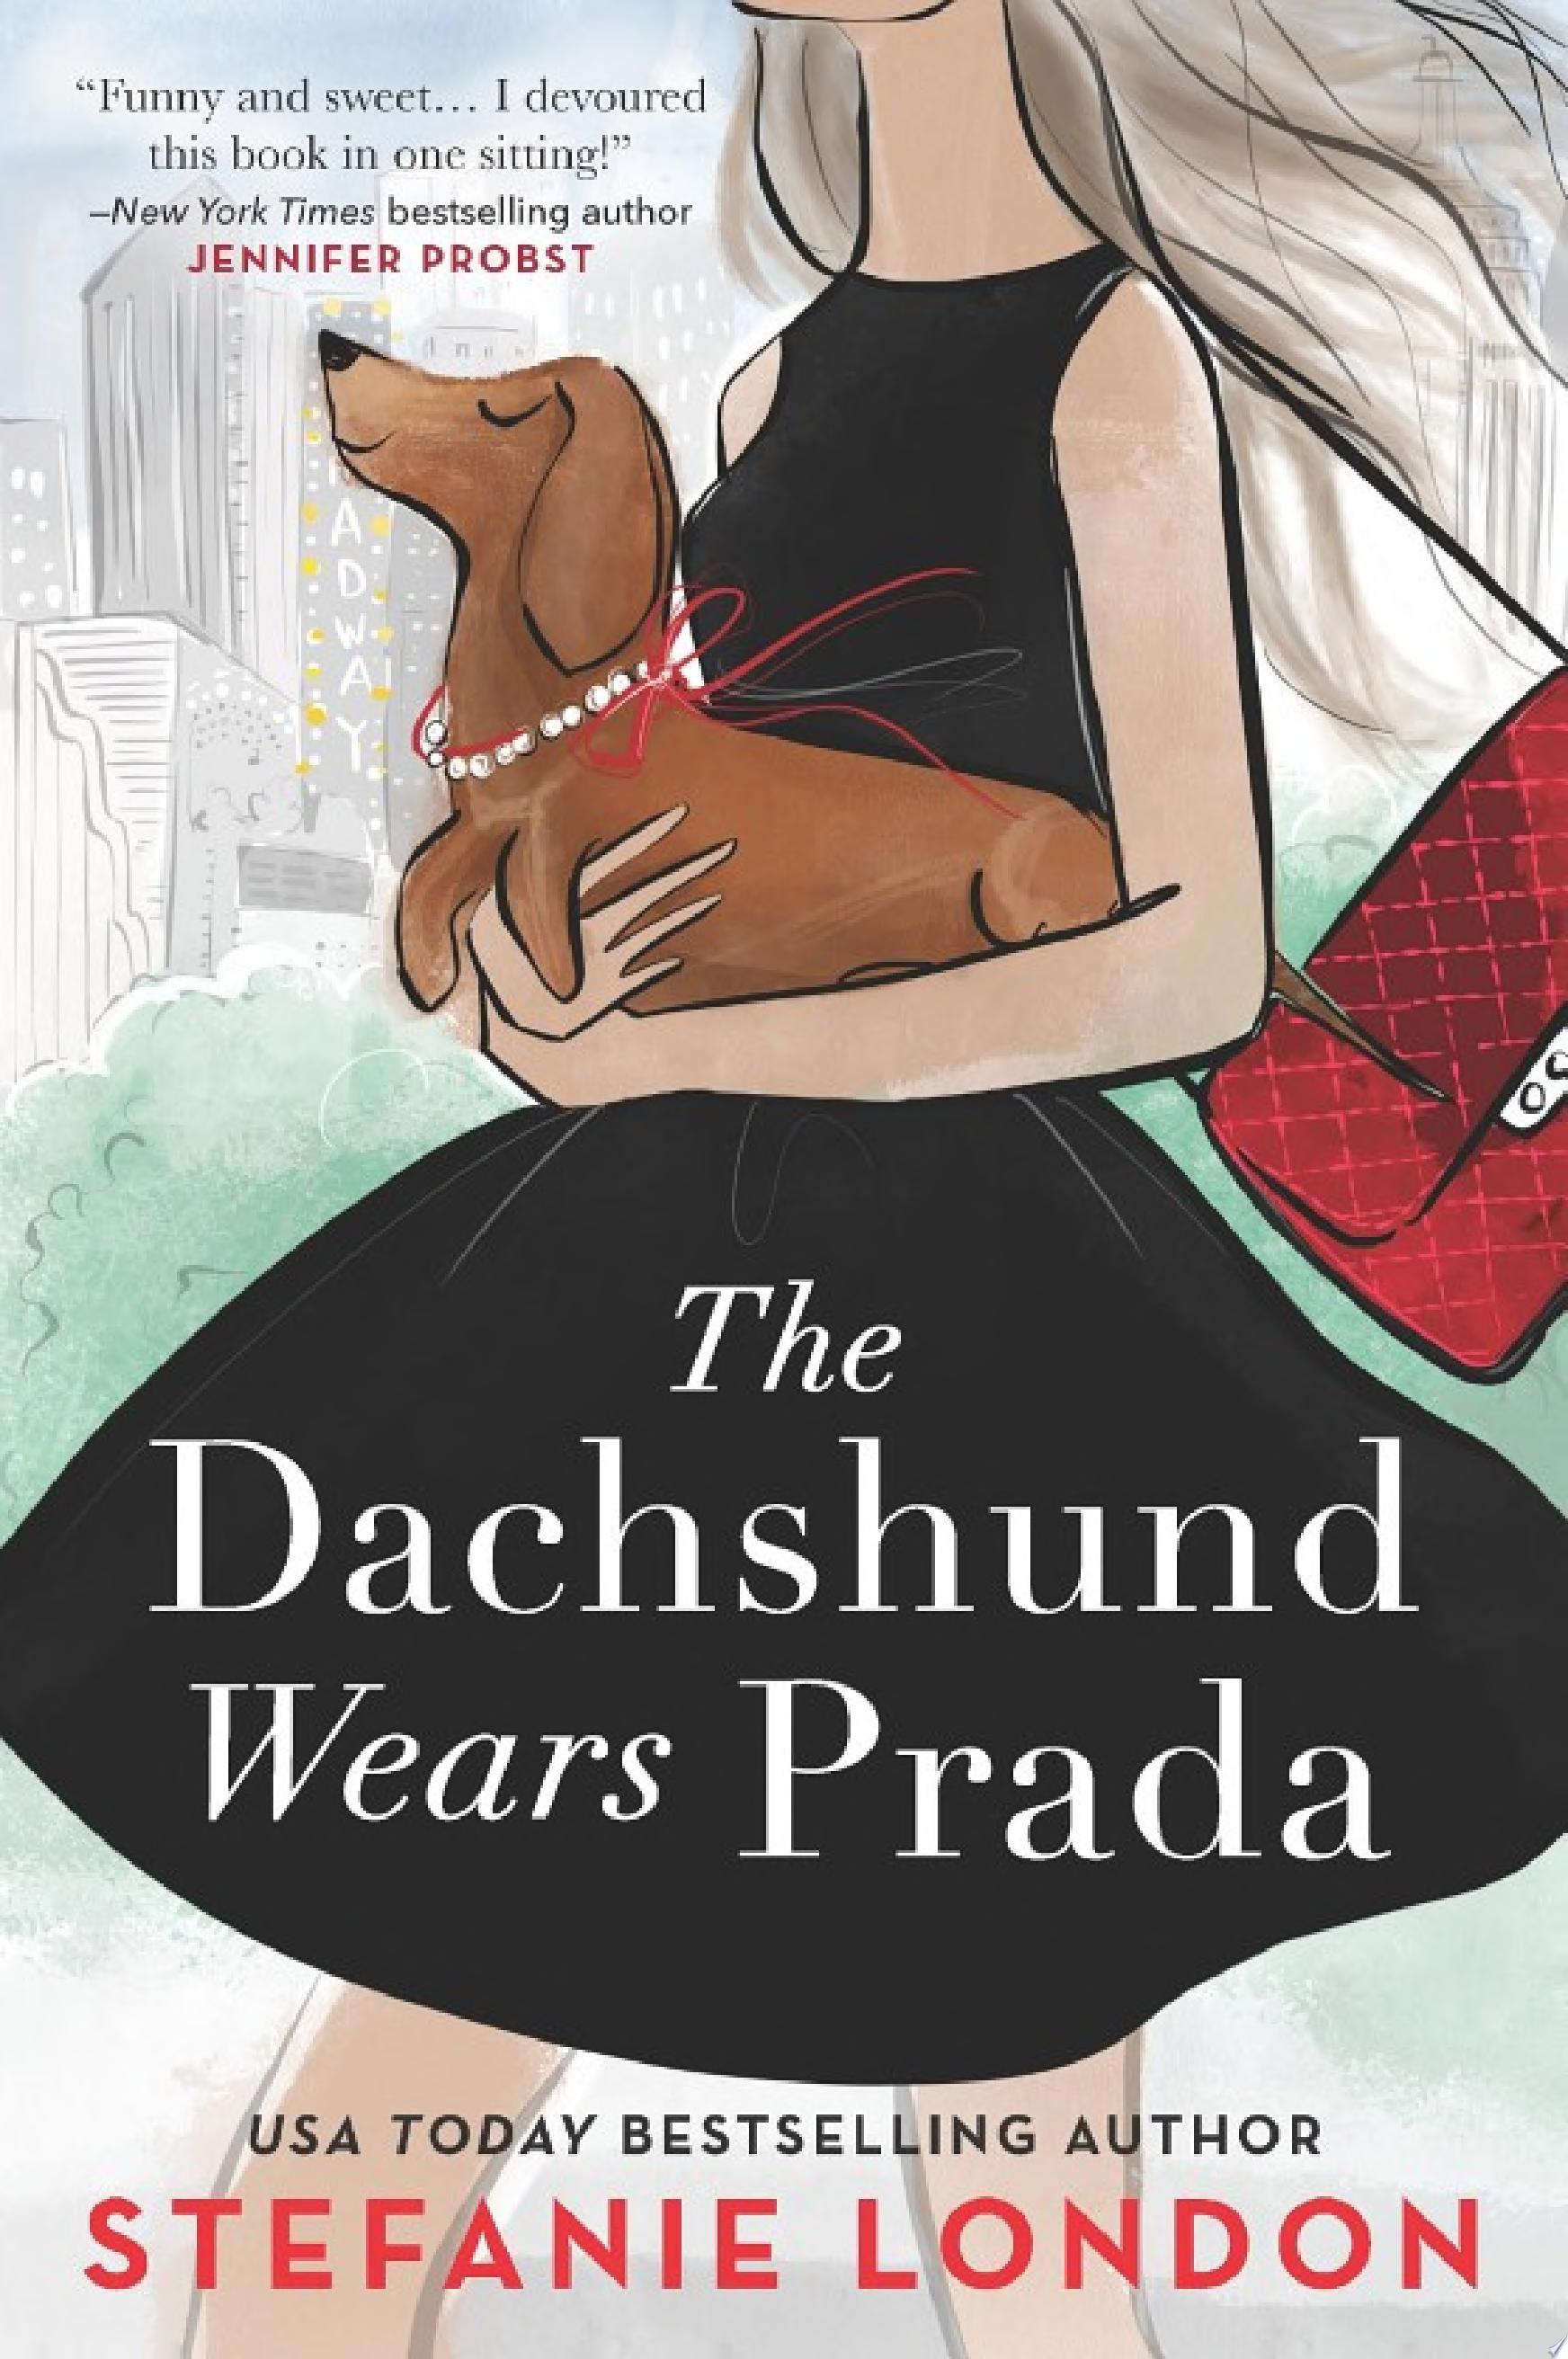 Image for "The Dachshund Wears Prada"